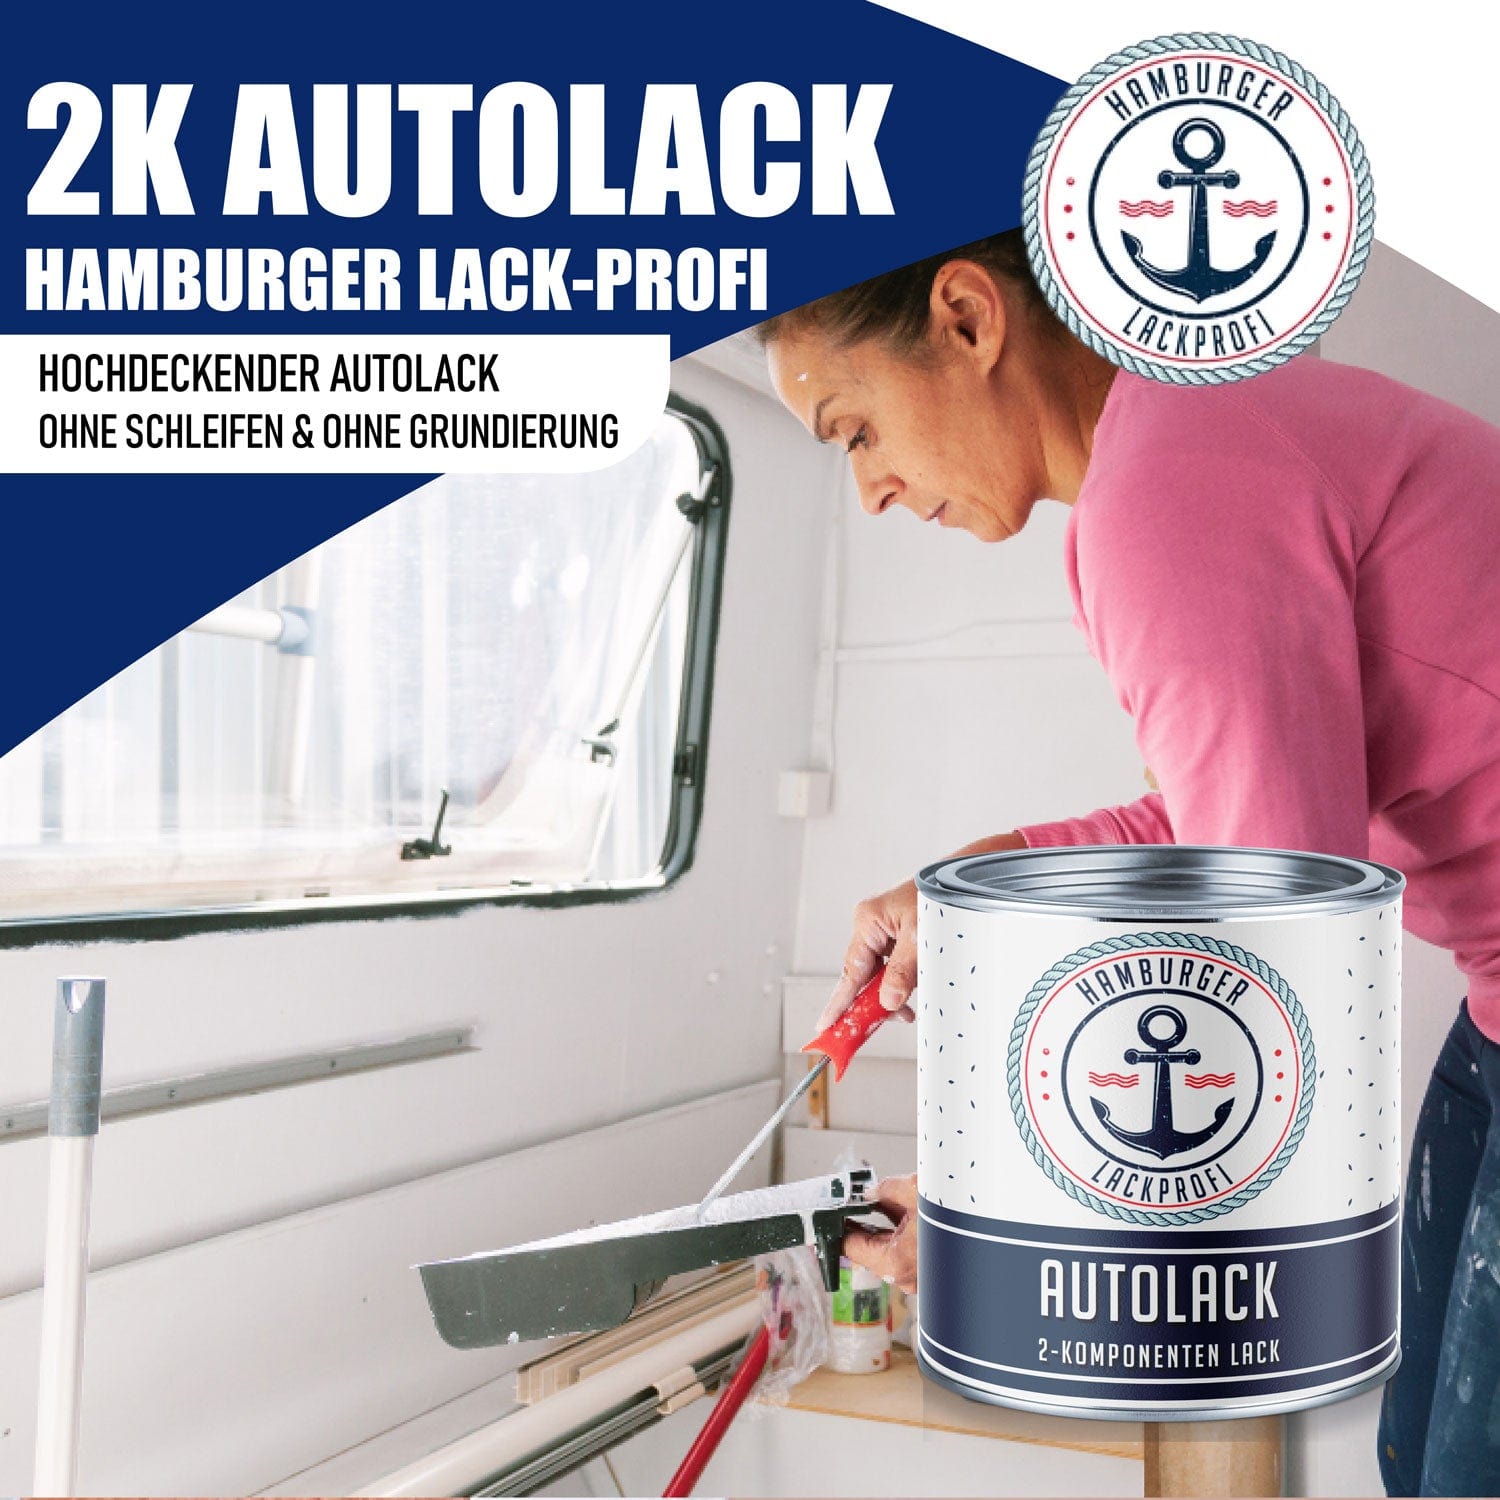 Hamburger Lack-Profi Lacke & Beschichtungen Hamburger Lack-Profi 2K Autolack in RAL 1006 Maisgelb mit Lackierset (X300) & Verdünnung (1 L) - 30% Sparangebot